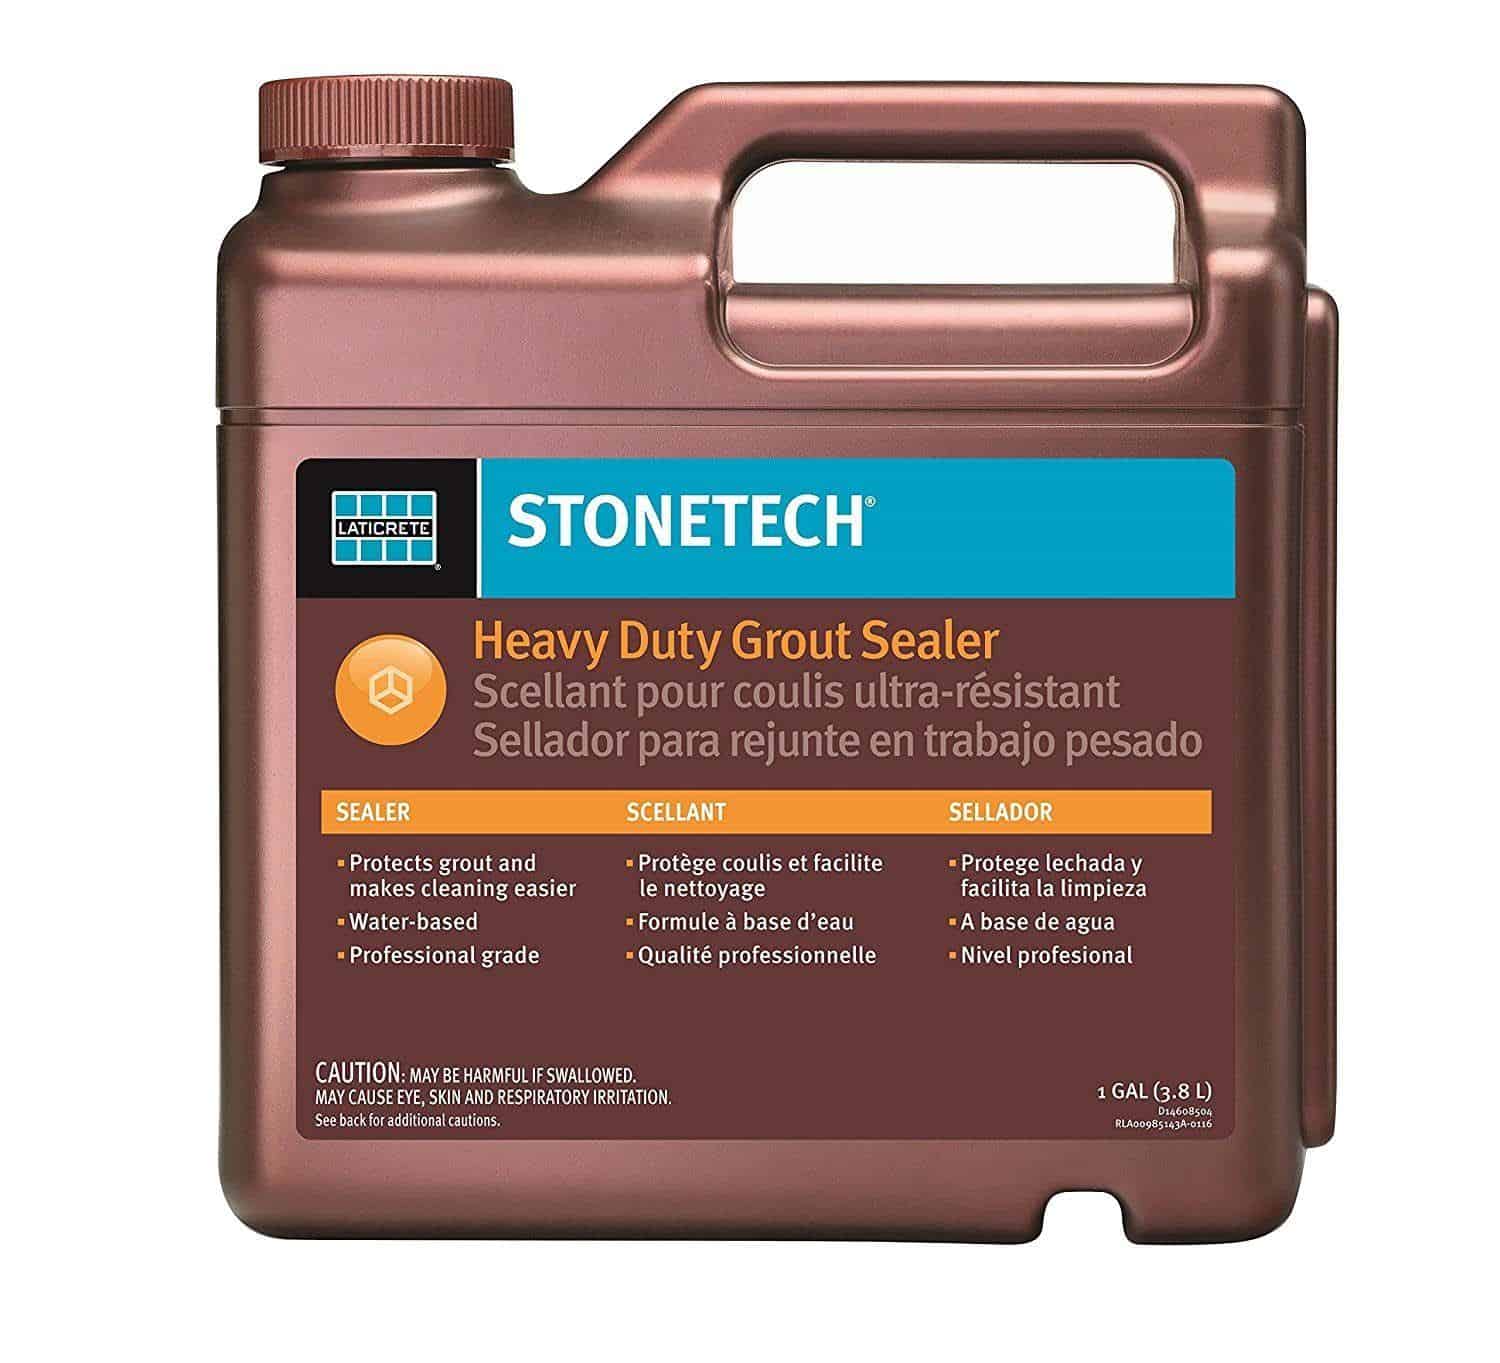 Stonetech Heavy Duty Grout Sealer